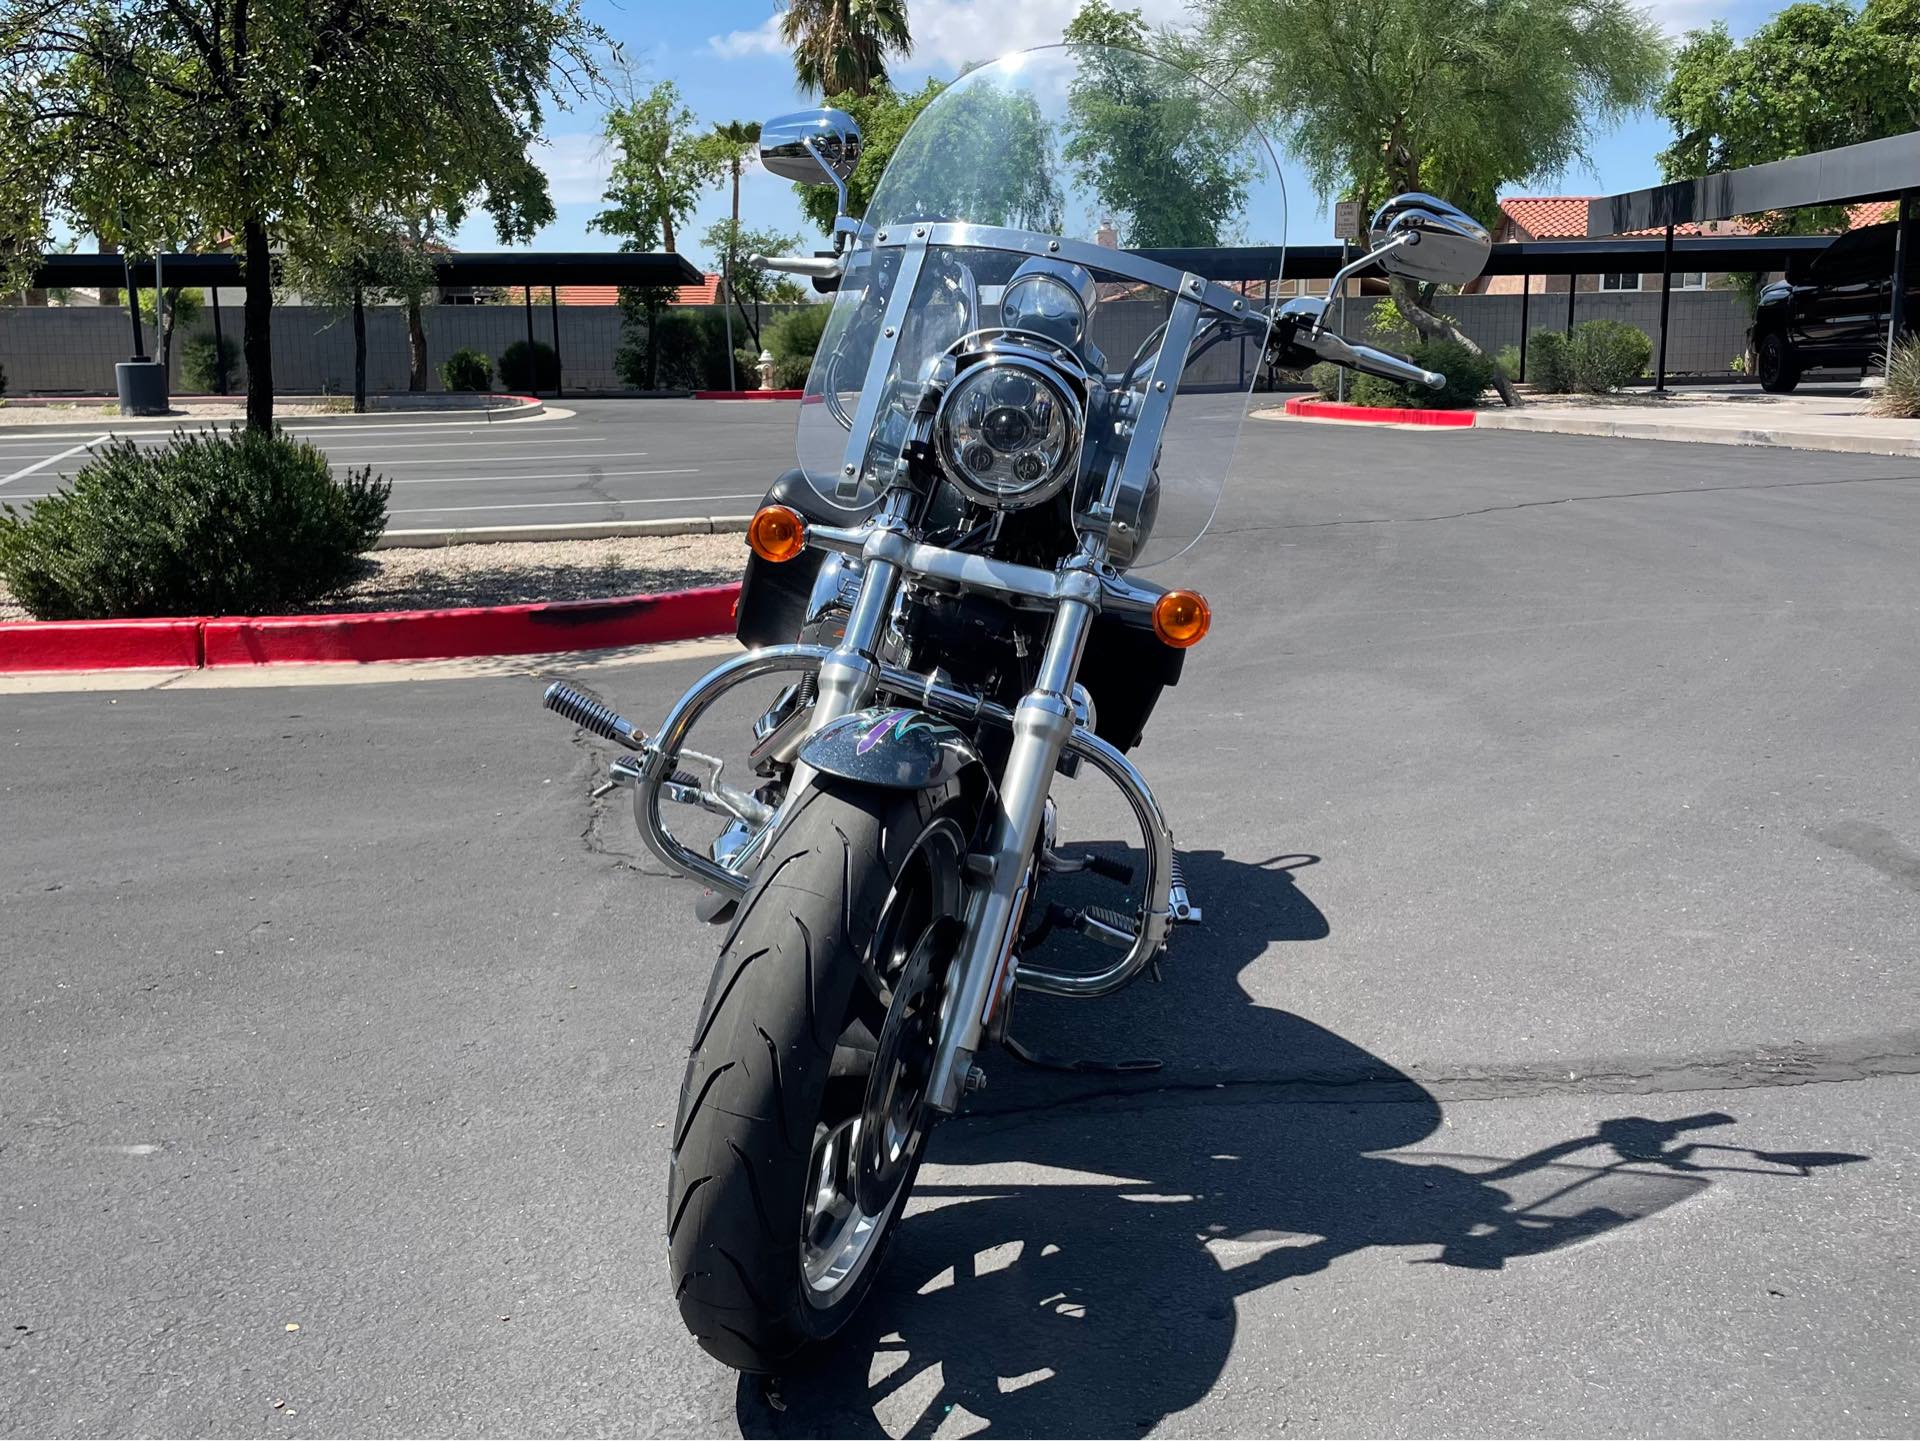 2015 Harley-Davidson Sportster SuperLow 1200T at Buddy Stubbs Arizona Harley-Davidson